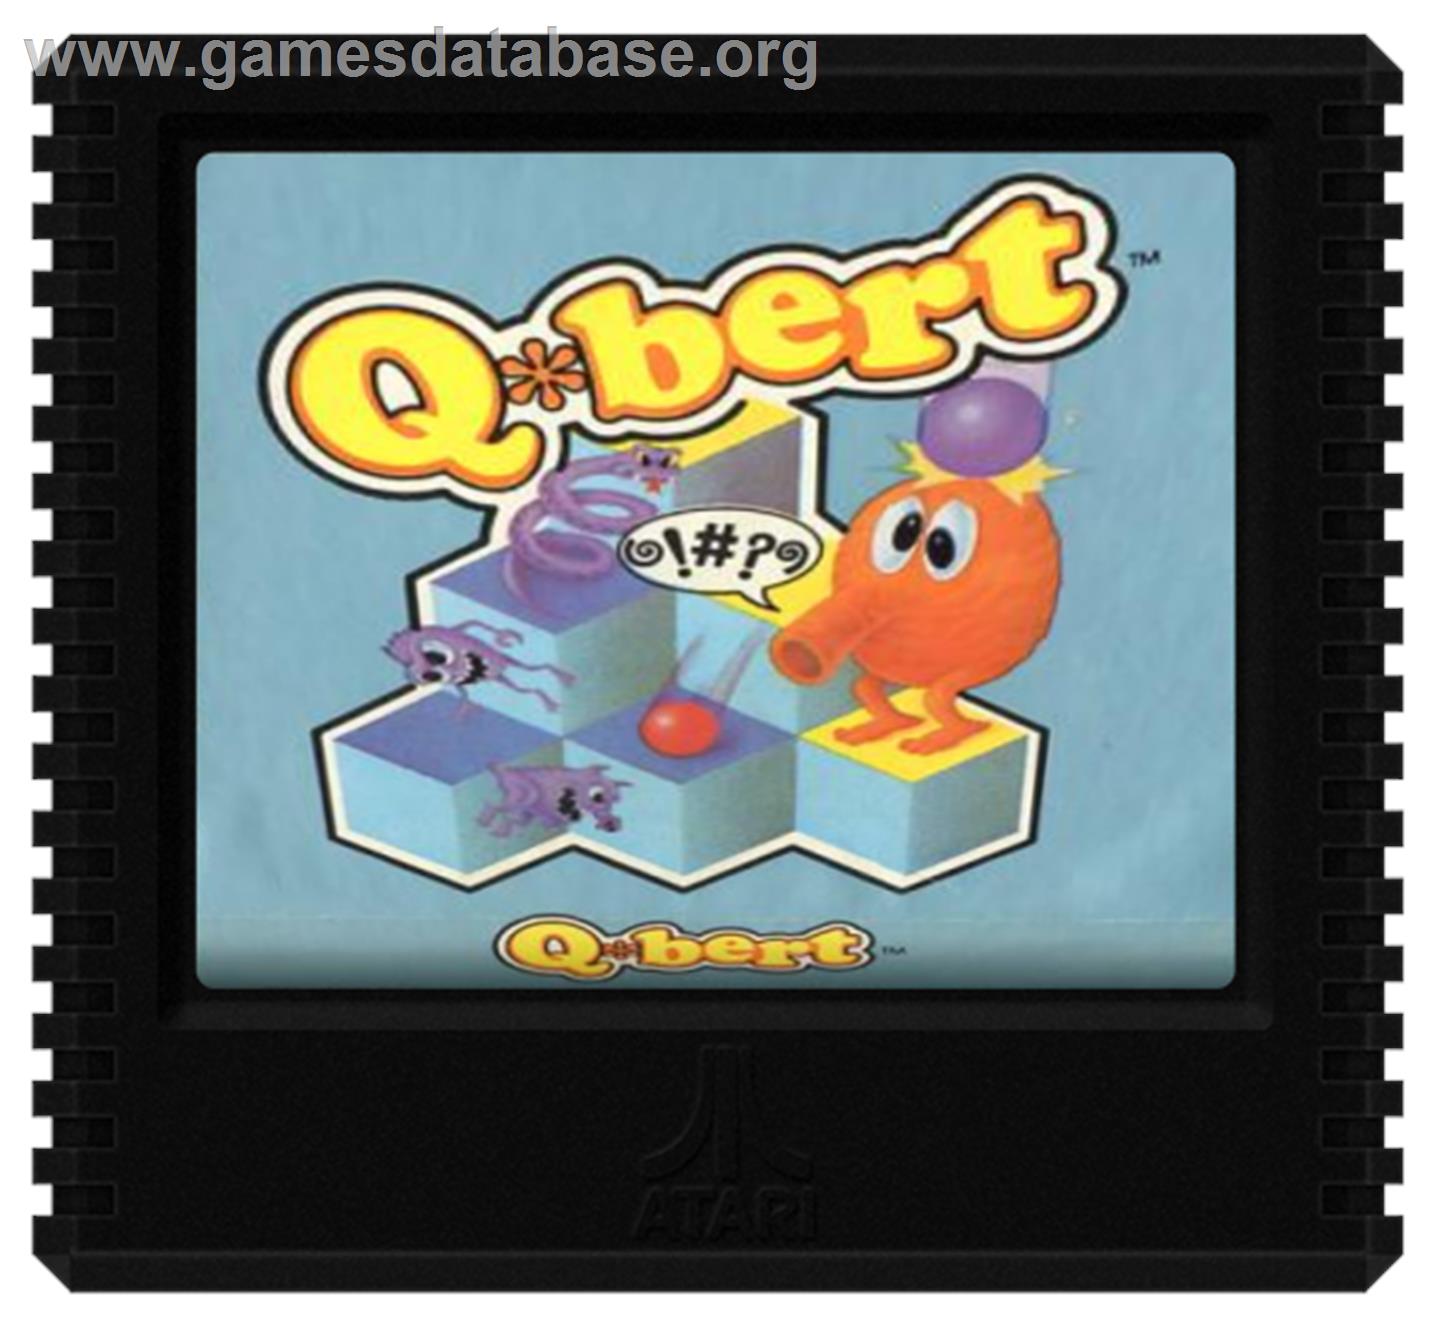 Q*bert - Atari 5200 - Artwork - Cartridge